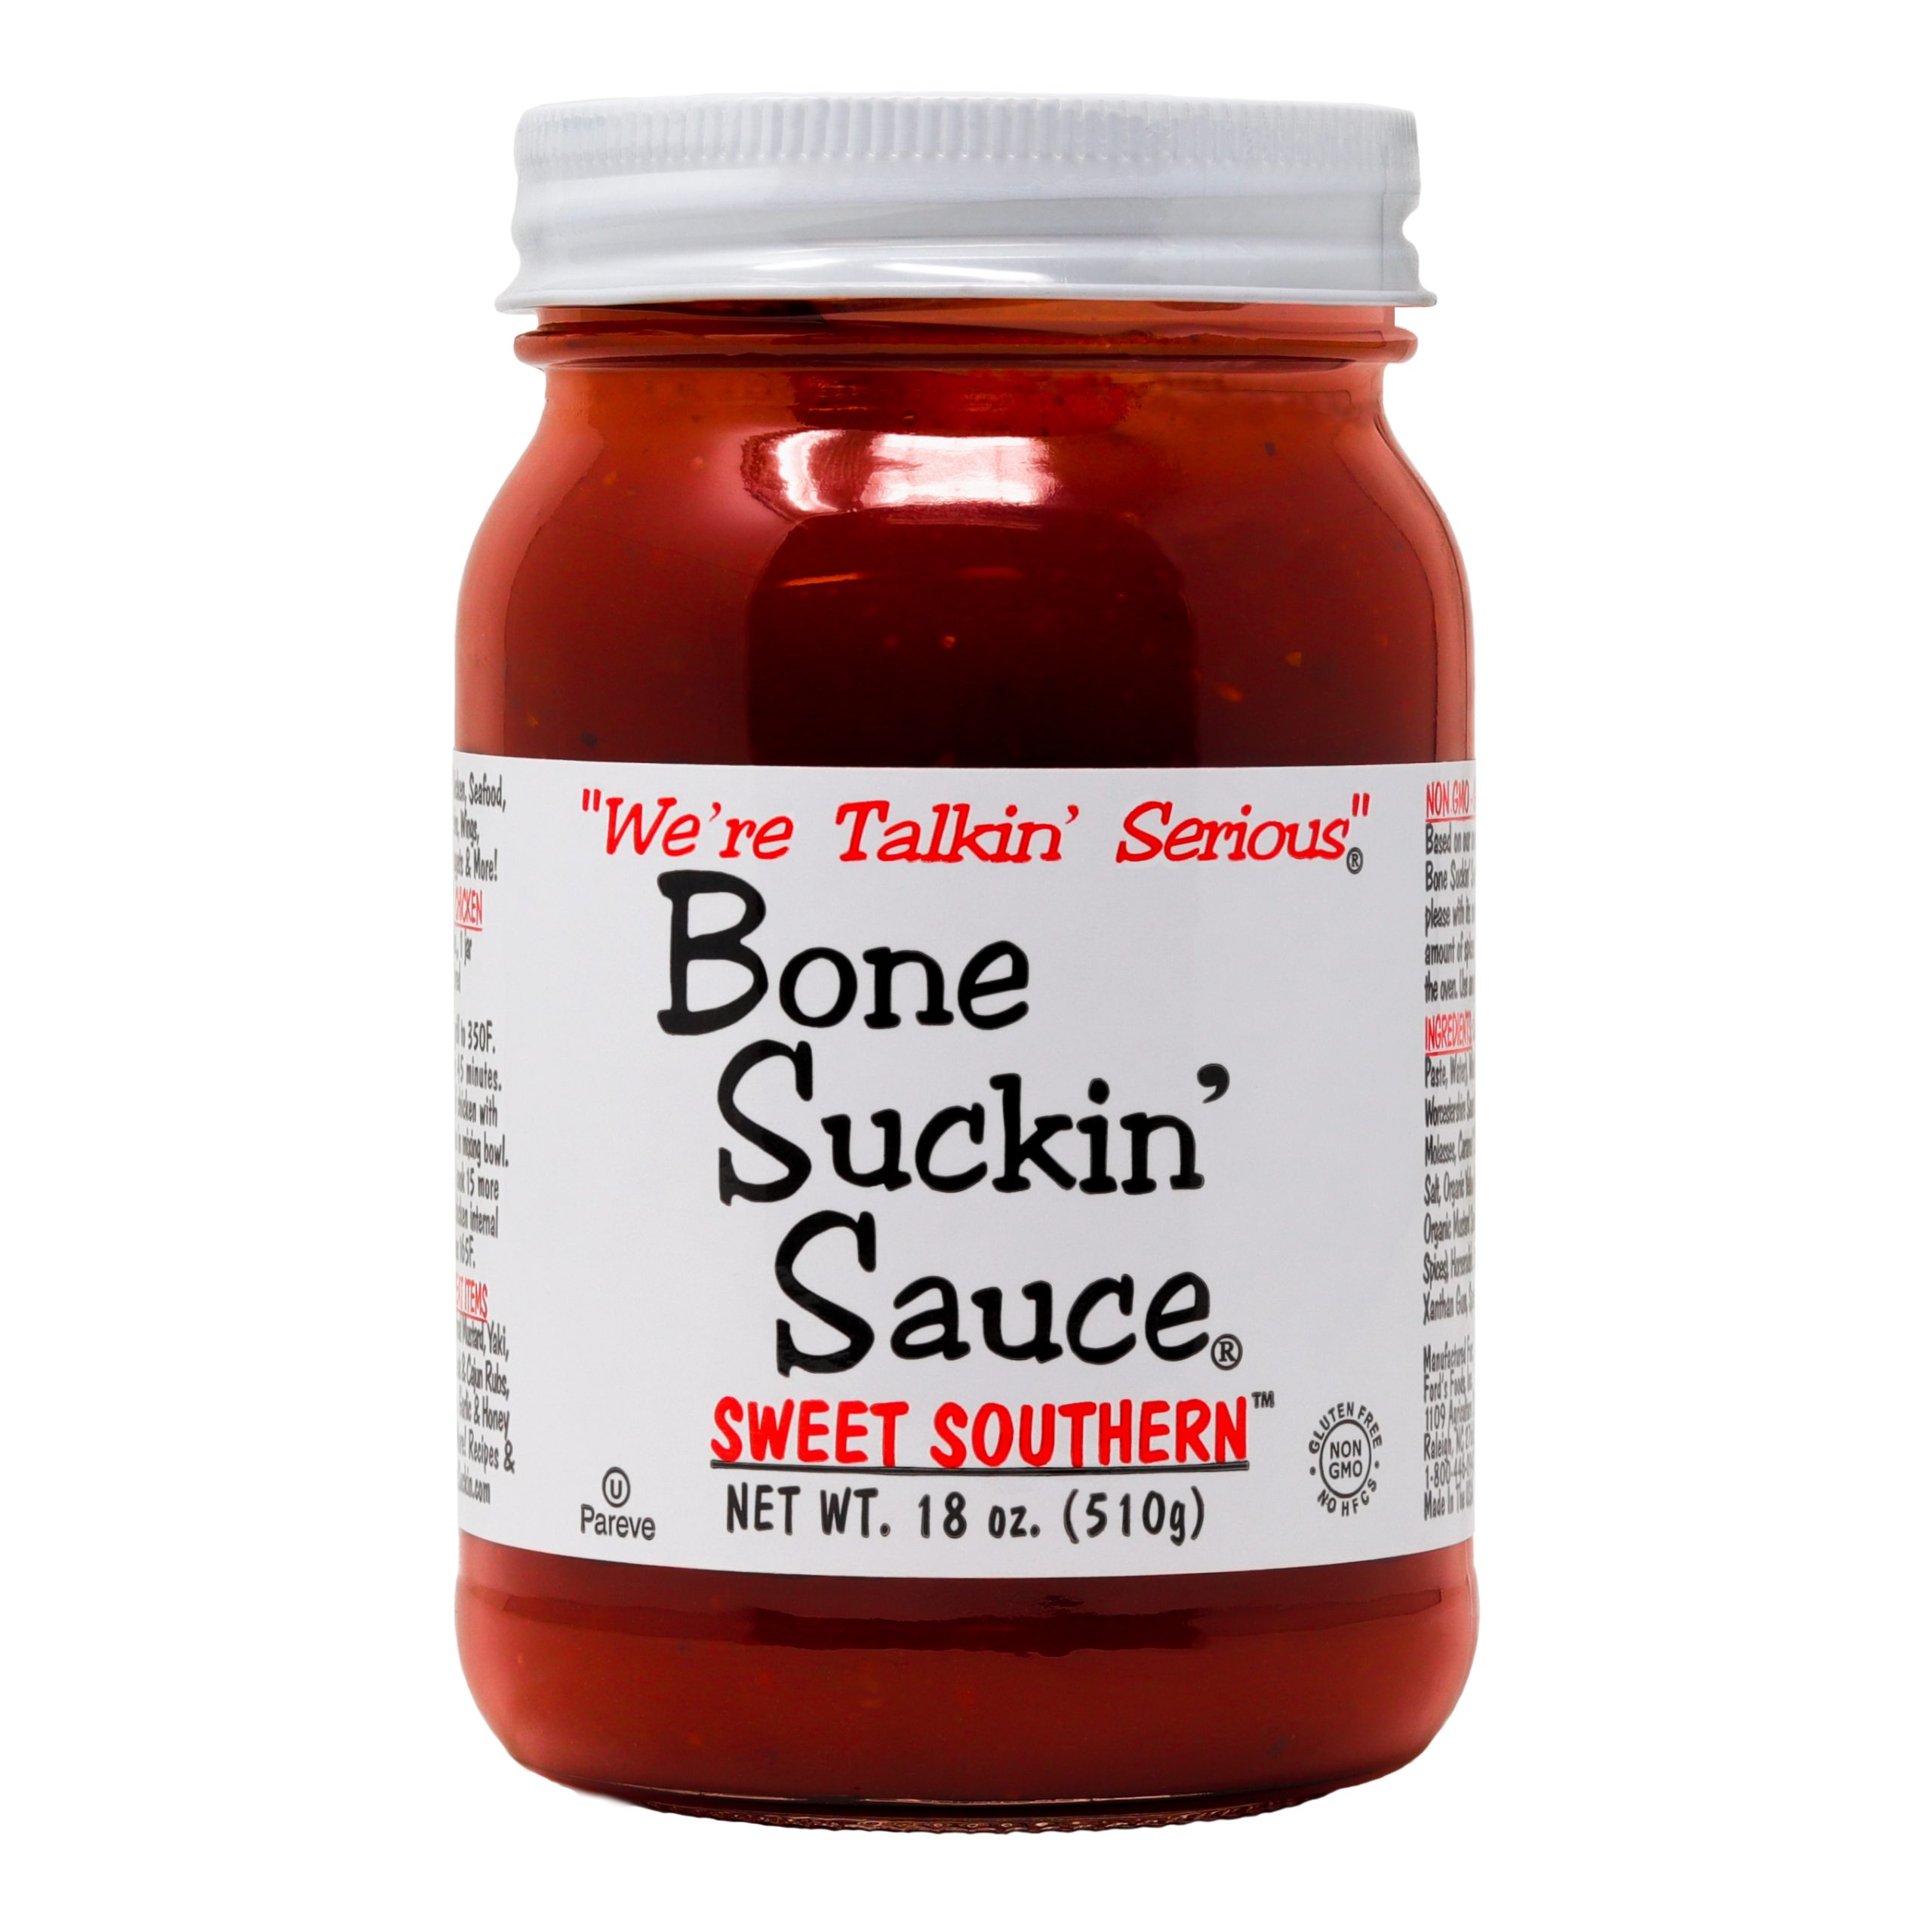 Bone Suckin' Sauce Sweet Southern BBQ Sauce - 18 oz in Glass Bottle, All-Purpose Barbecue Sauce, For Ribs, Chicken, Pork, Beef, Gluten-Free, Non-GMO, Kosher, Sweetened w/ Cane Sugar & Molasses